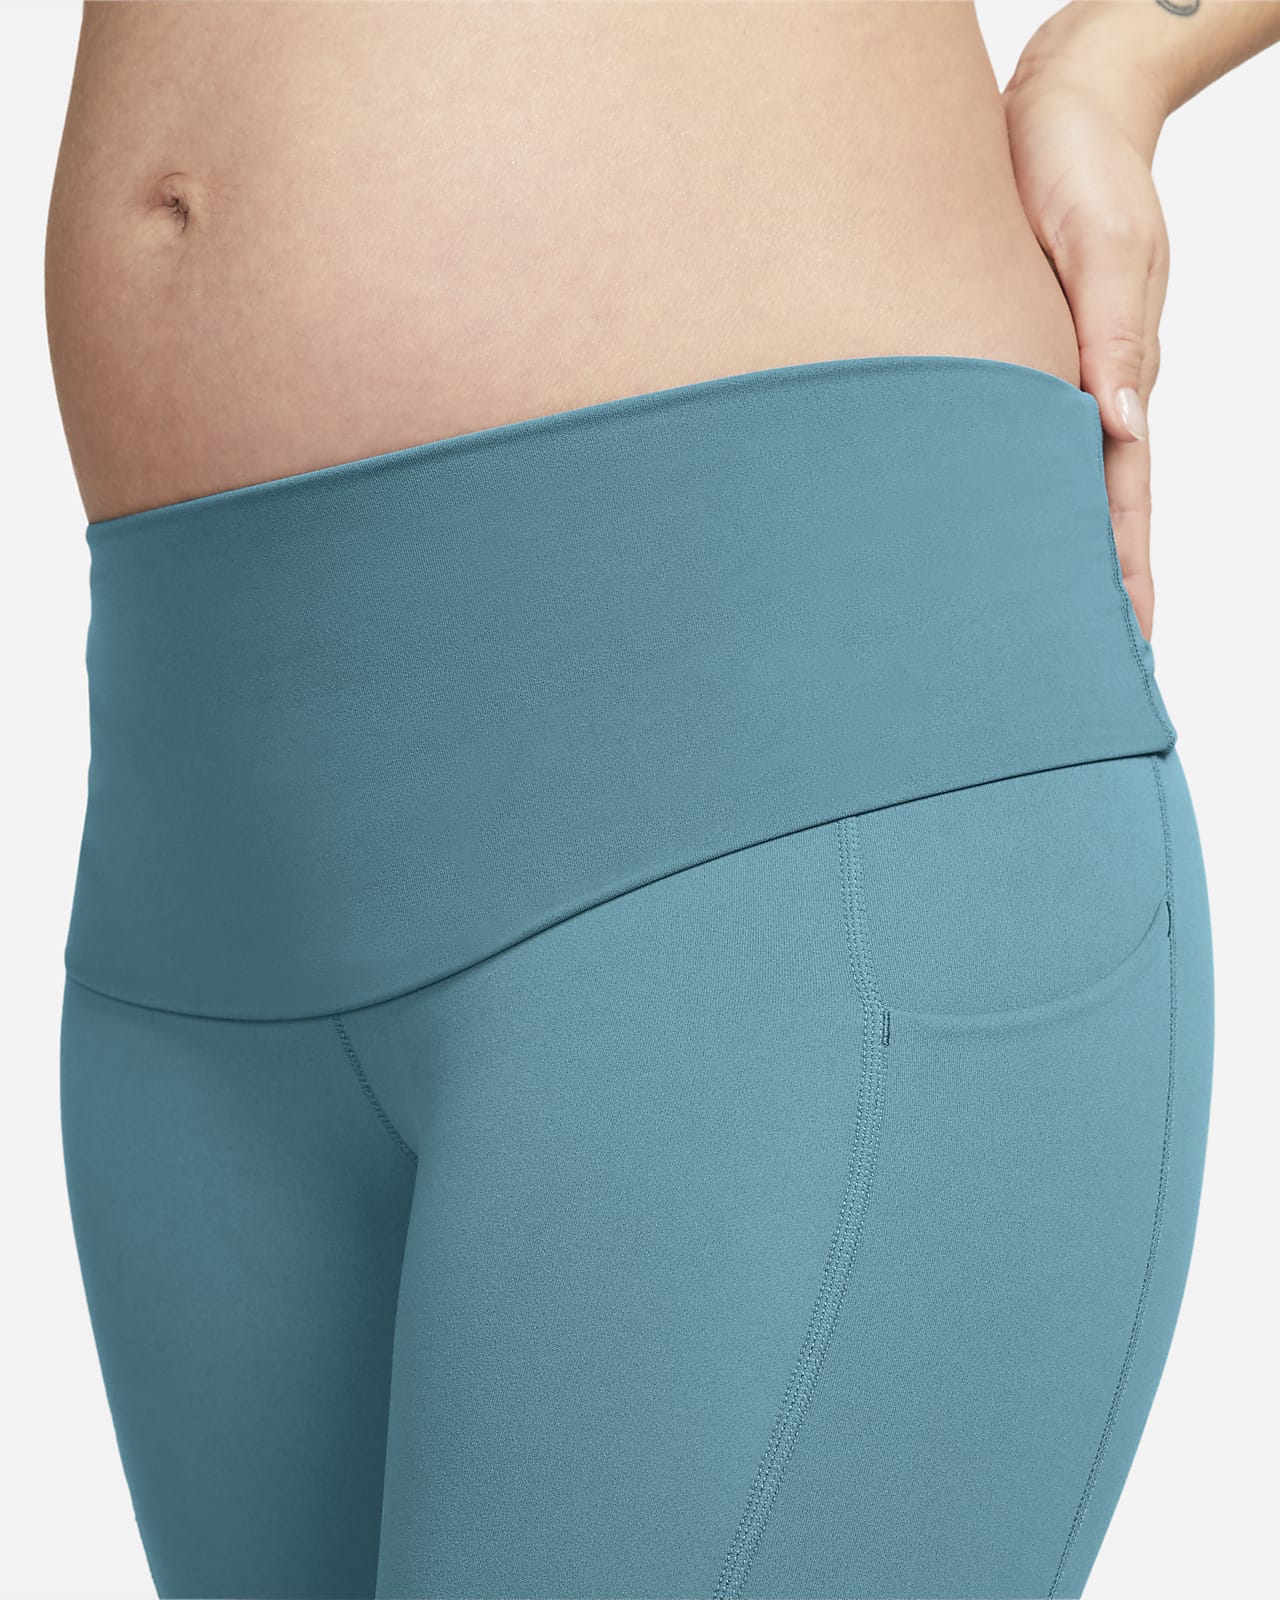 Turquoise Flexible leggings, leggings with pockets